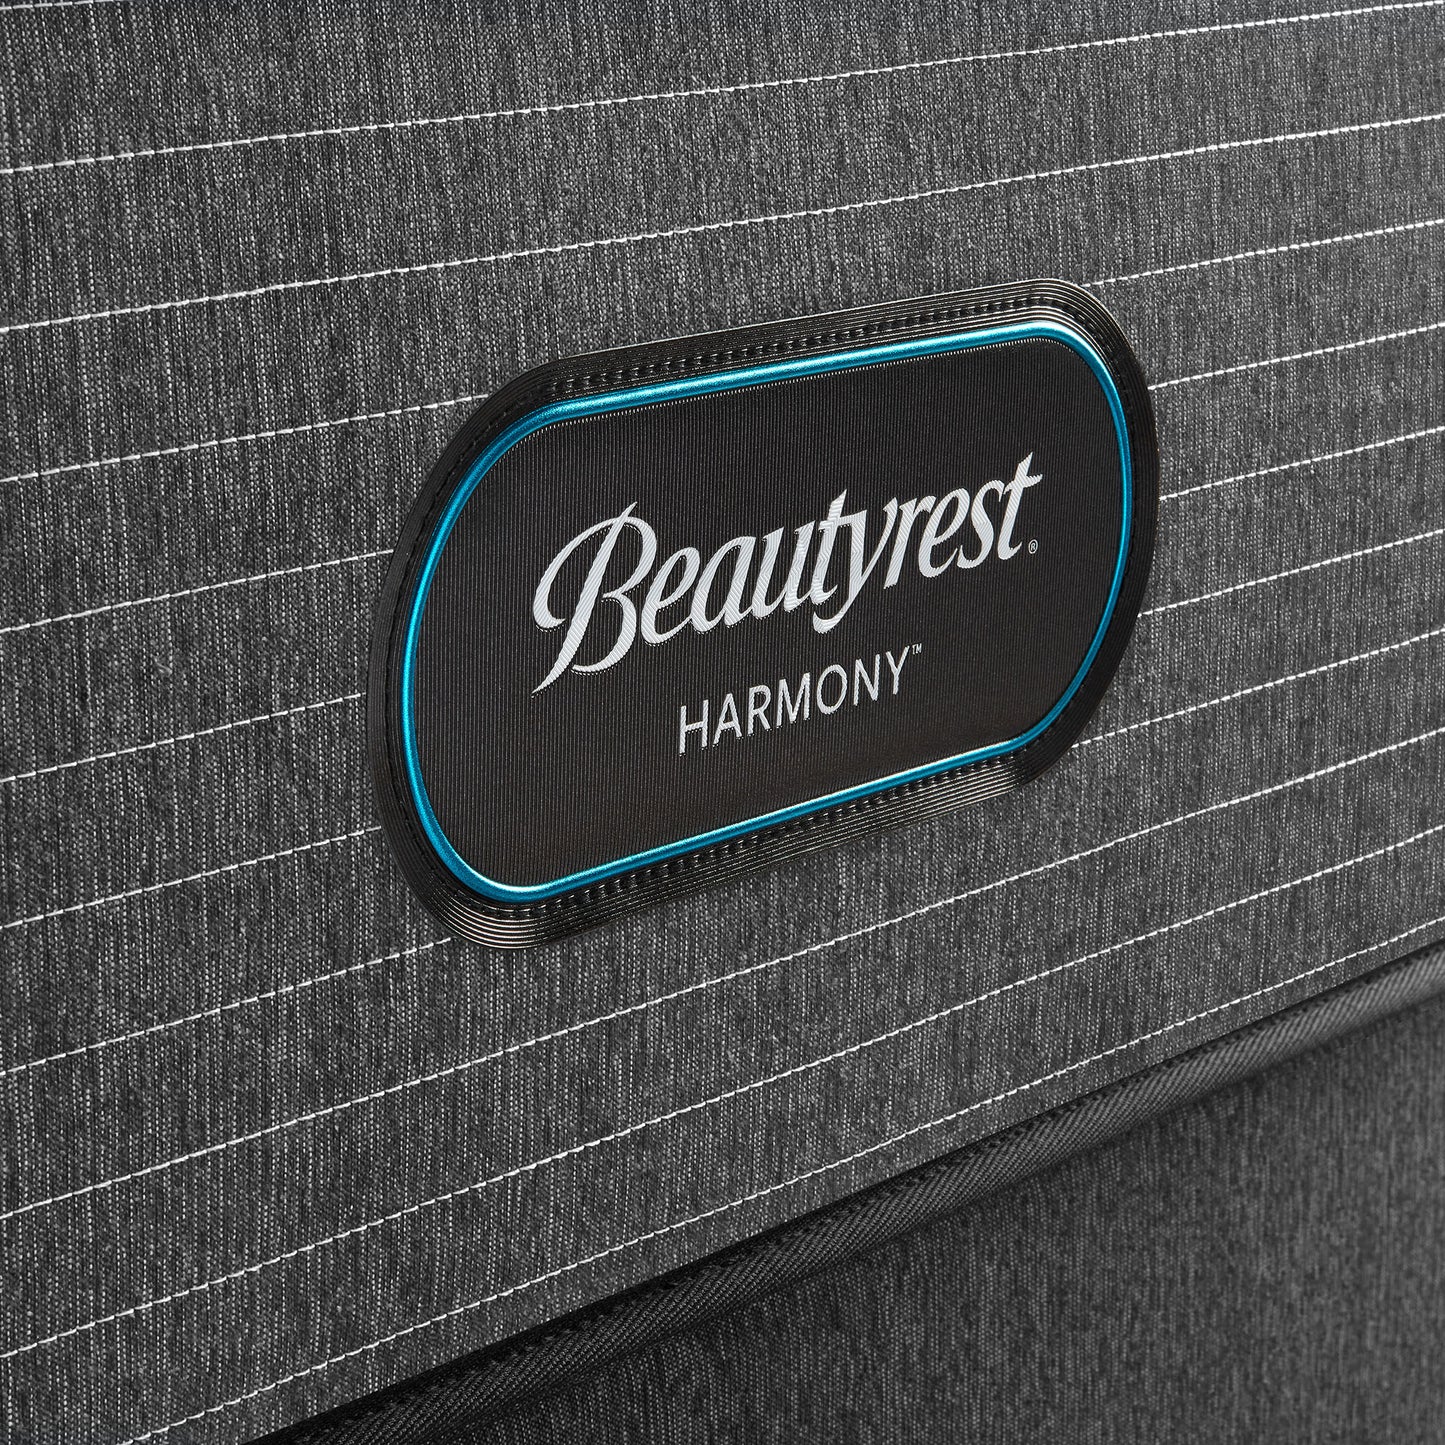 Beautyrest-Harmony-Cayman Extra Firm